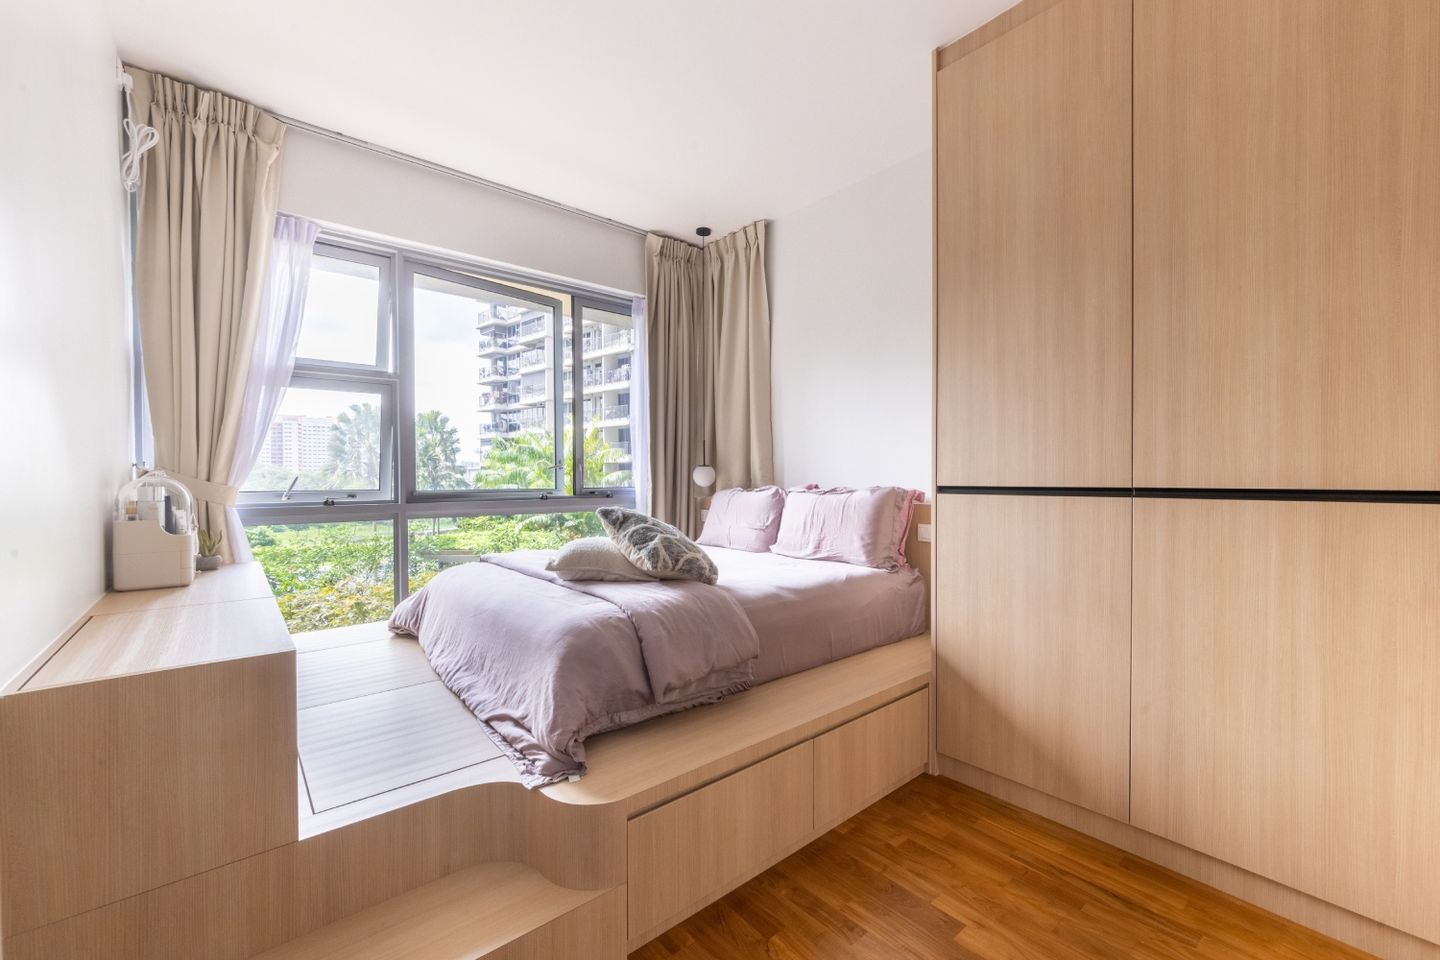 Wooden Bedroom Design With Sliding Wardrobe - Livspace